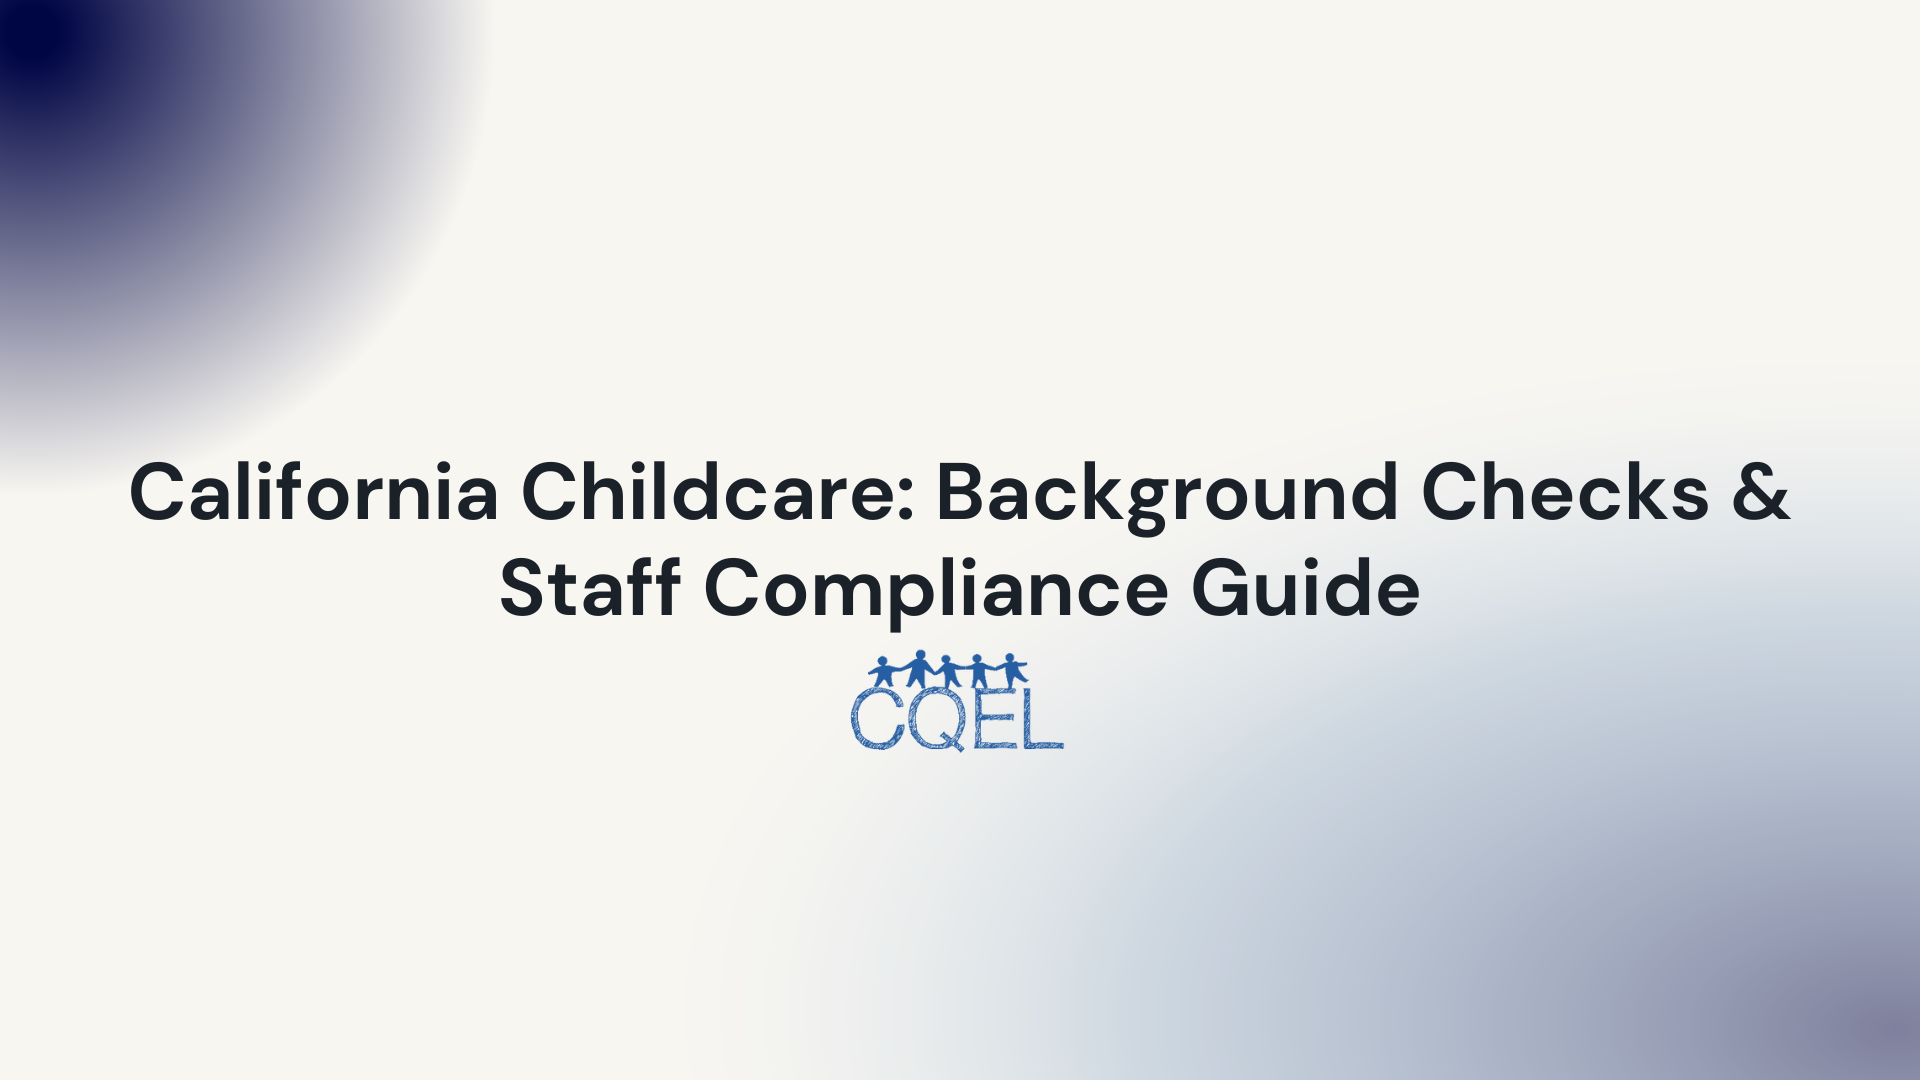 California Childcare: Background Checks & Staff Compliance Guide